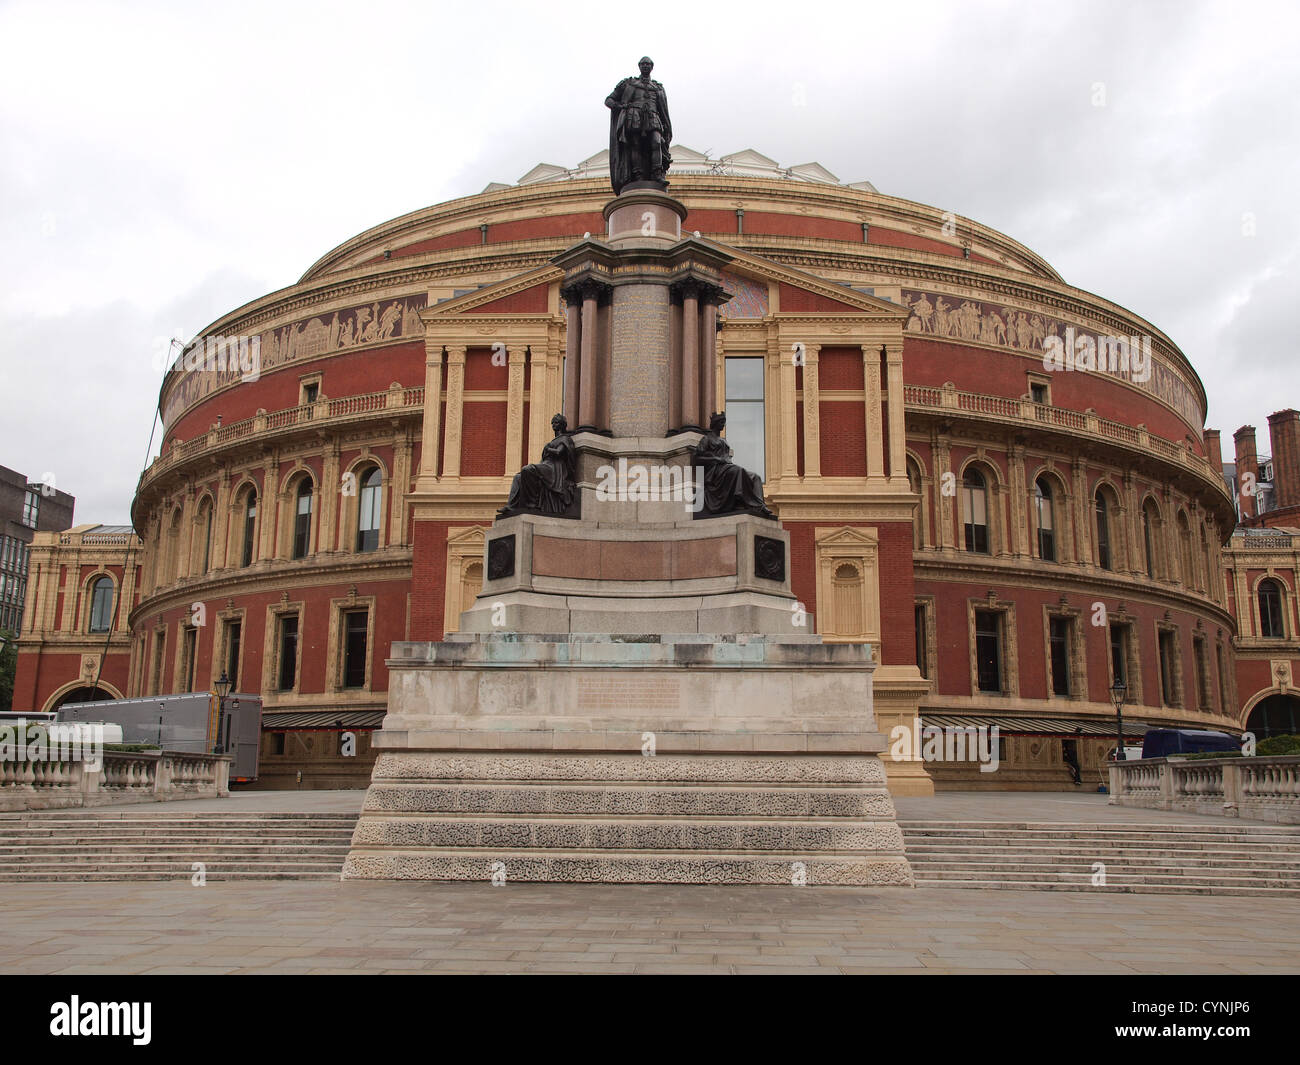 Royal Albert Hall, London, UK Stock Photo